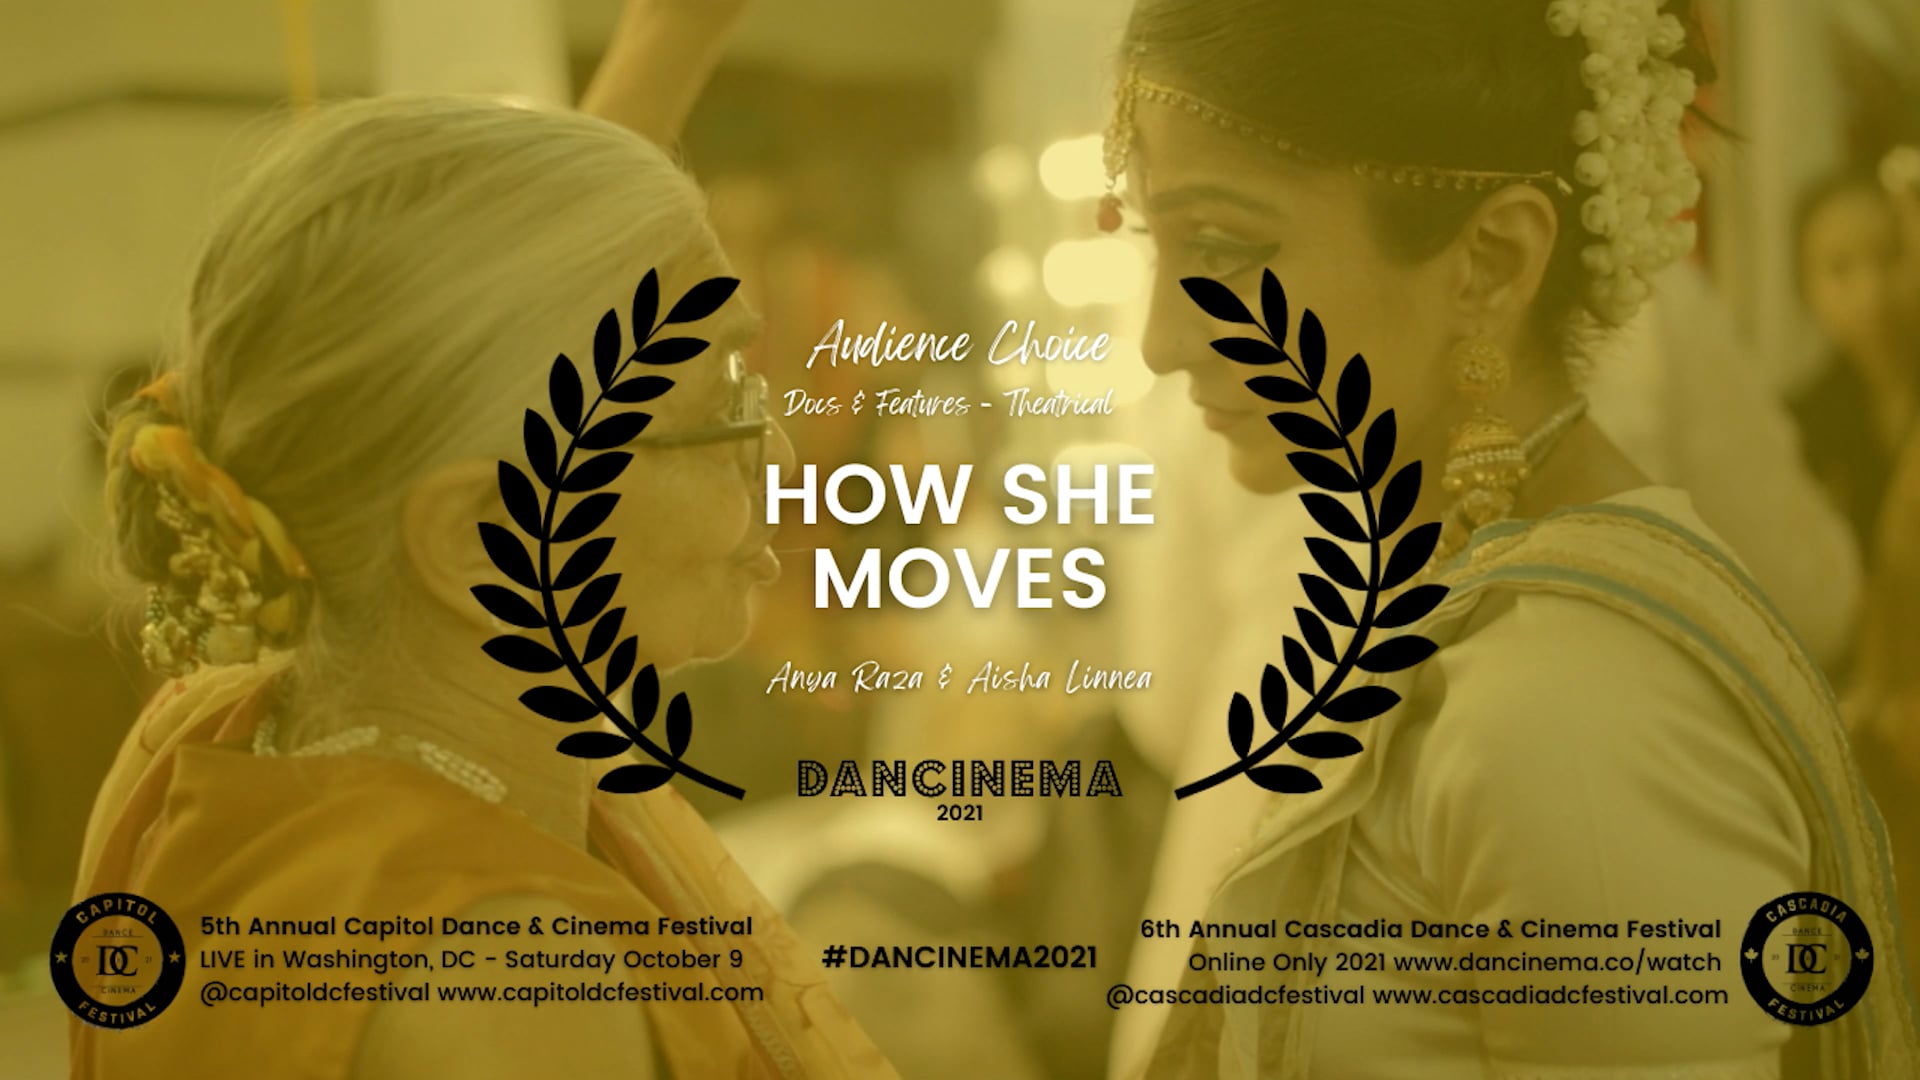 Dancinema 2021 Audience Choice: HOW SHE MOVES